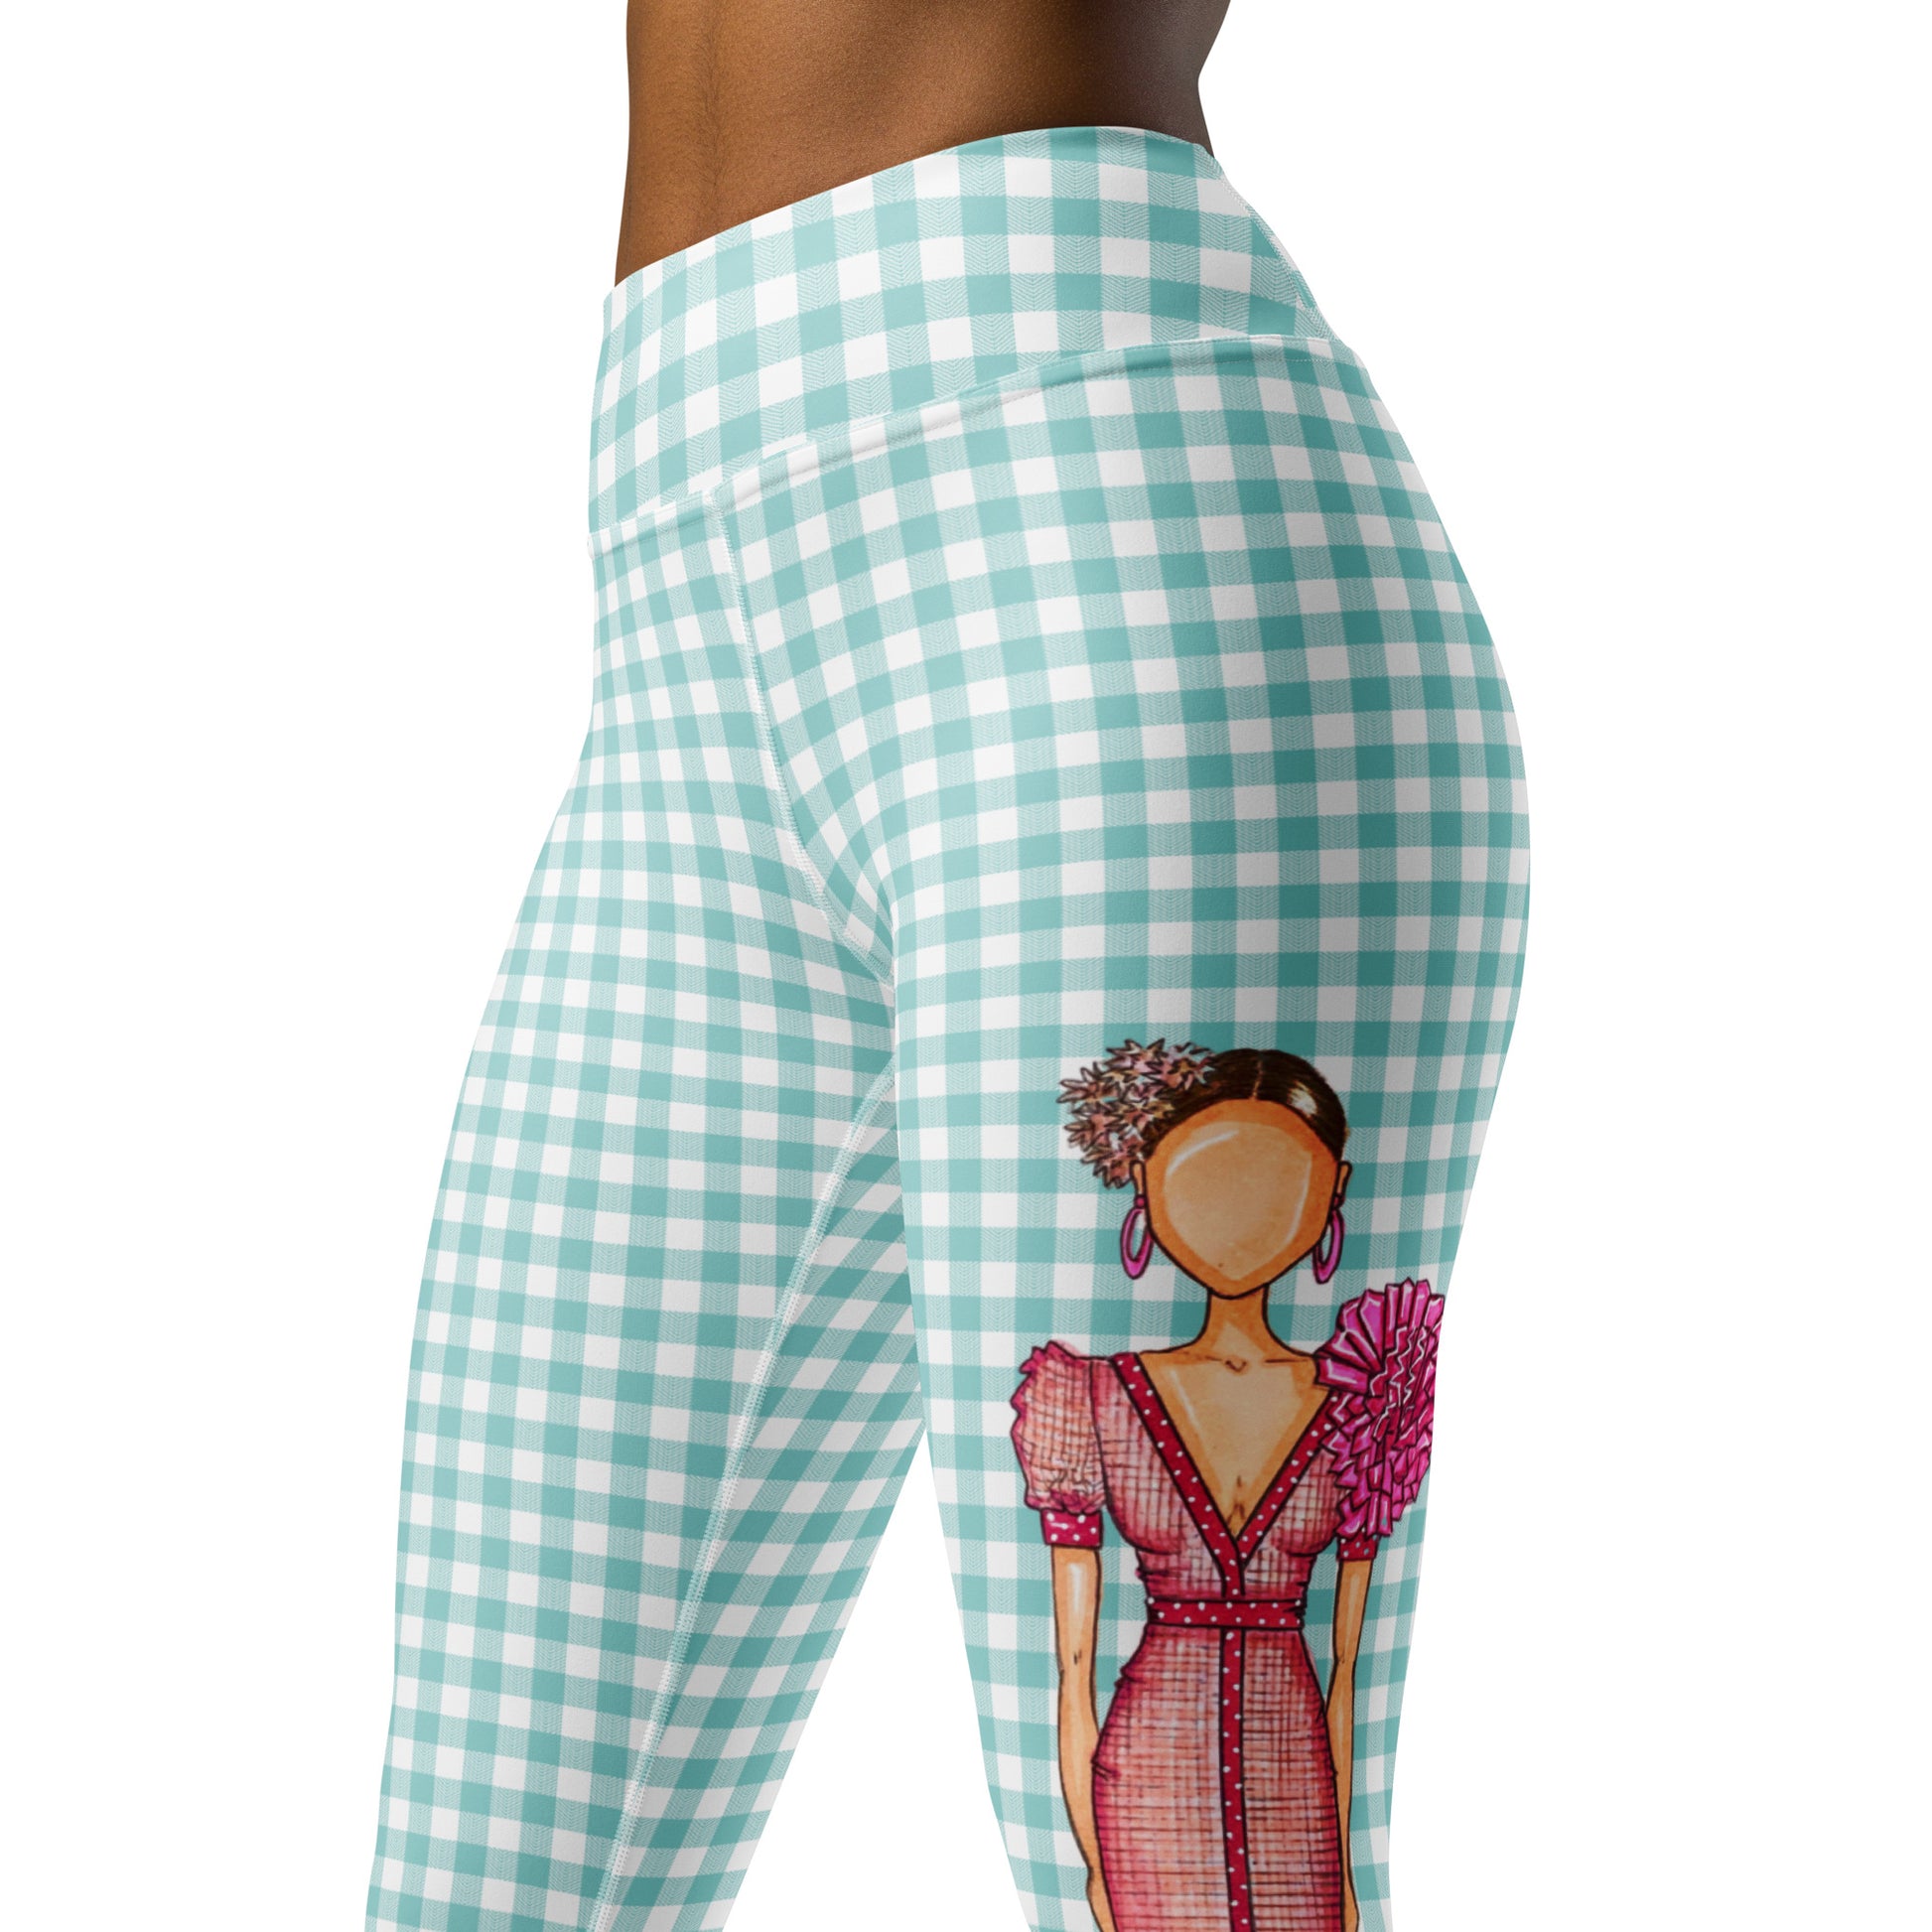 Flamenco Dancer Leggings, green gingham check high waisted yoga leggings with a pink dress design - IllustrArte